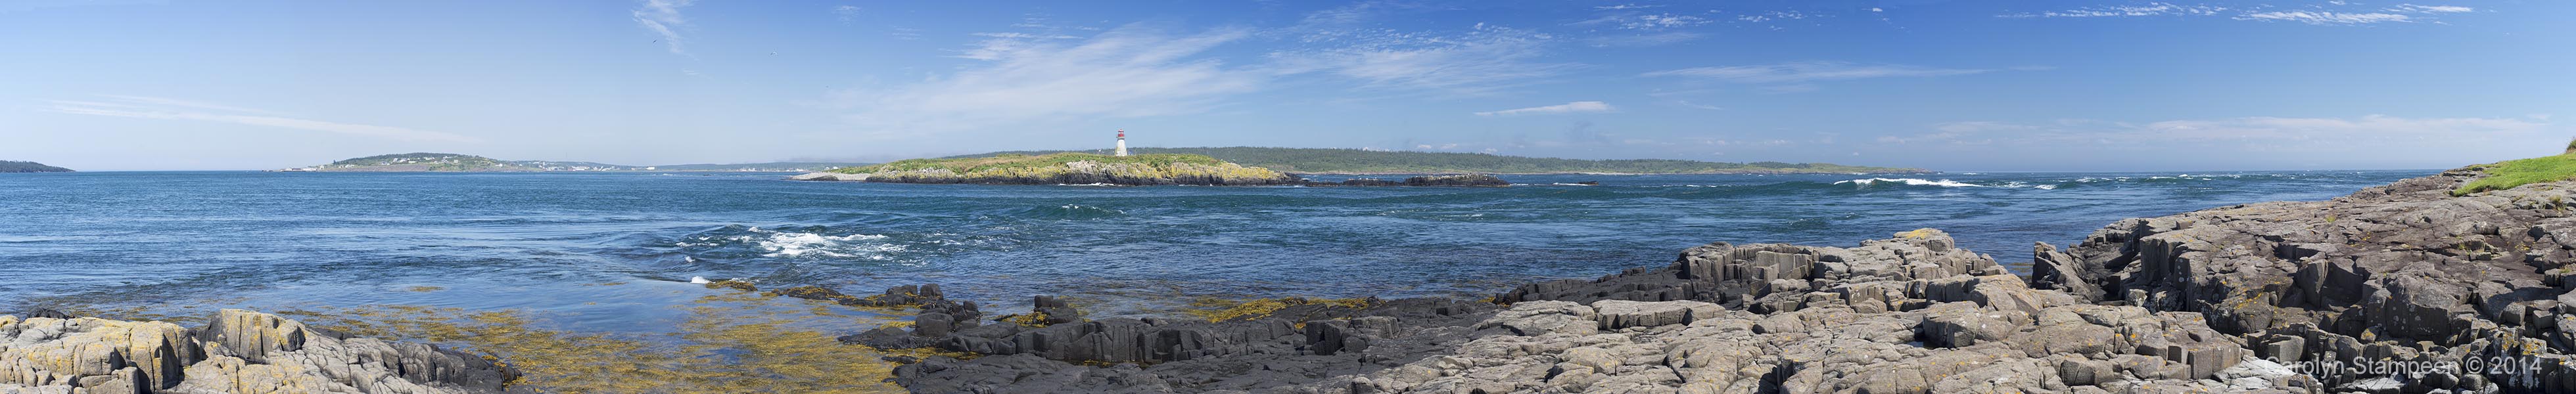 Lighthouse on Peter's Island, Grand Passage